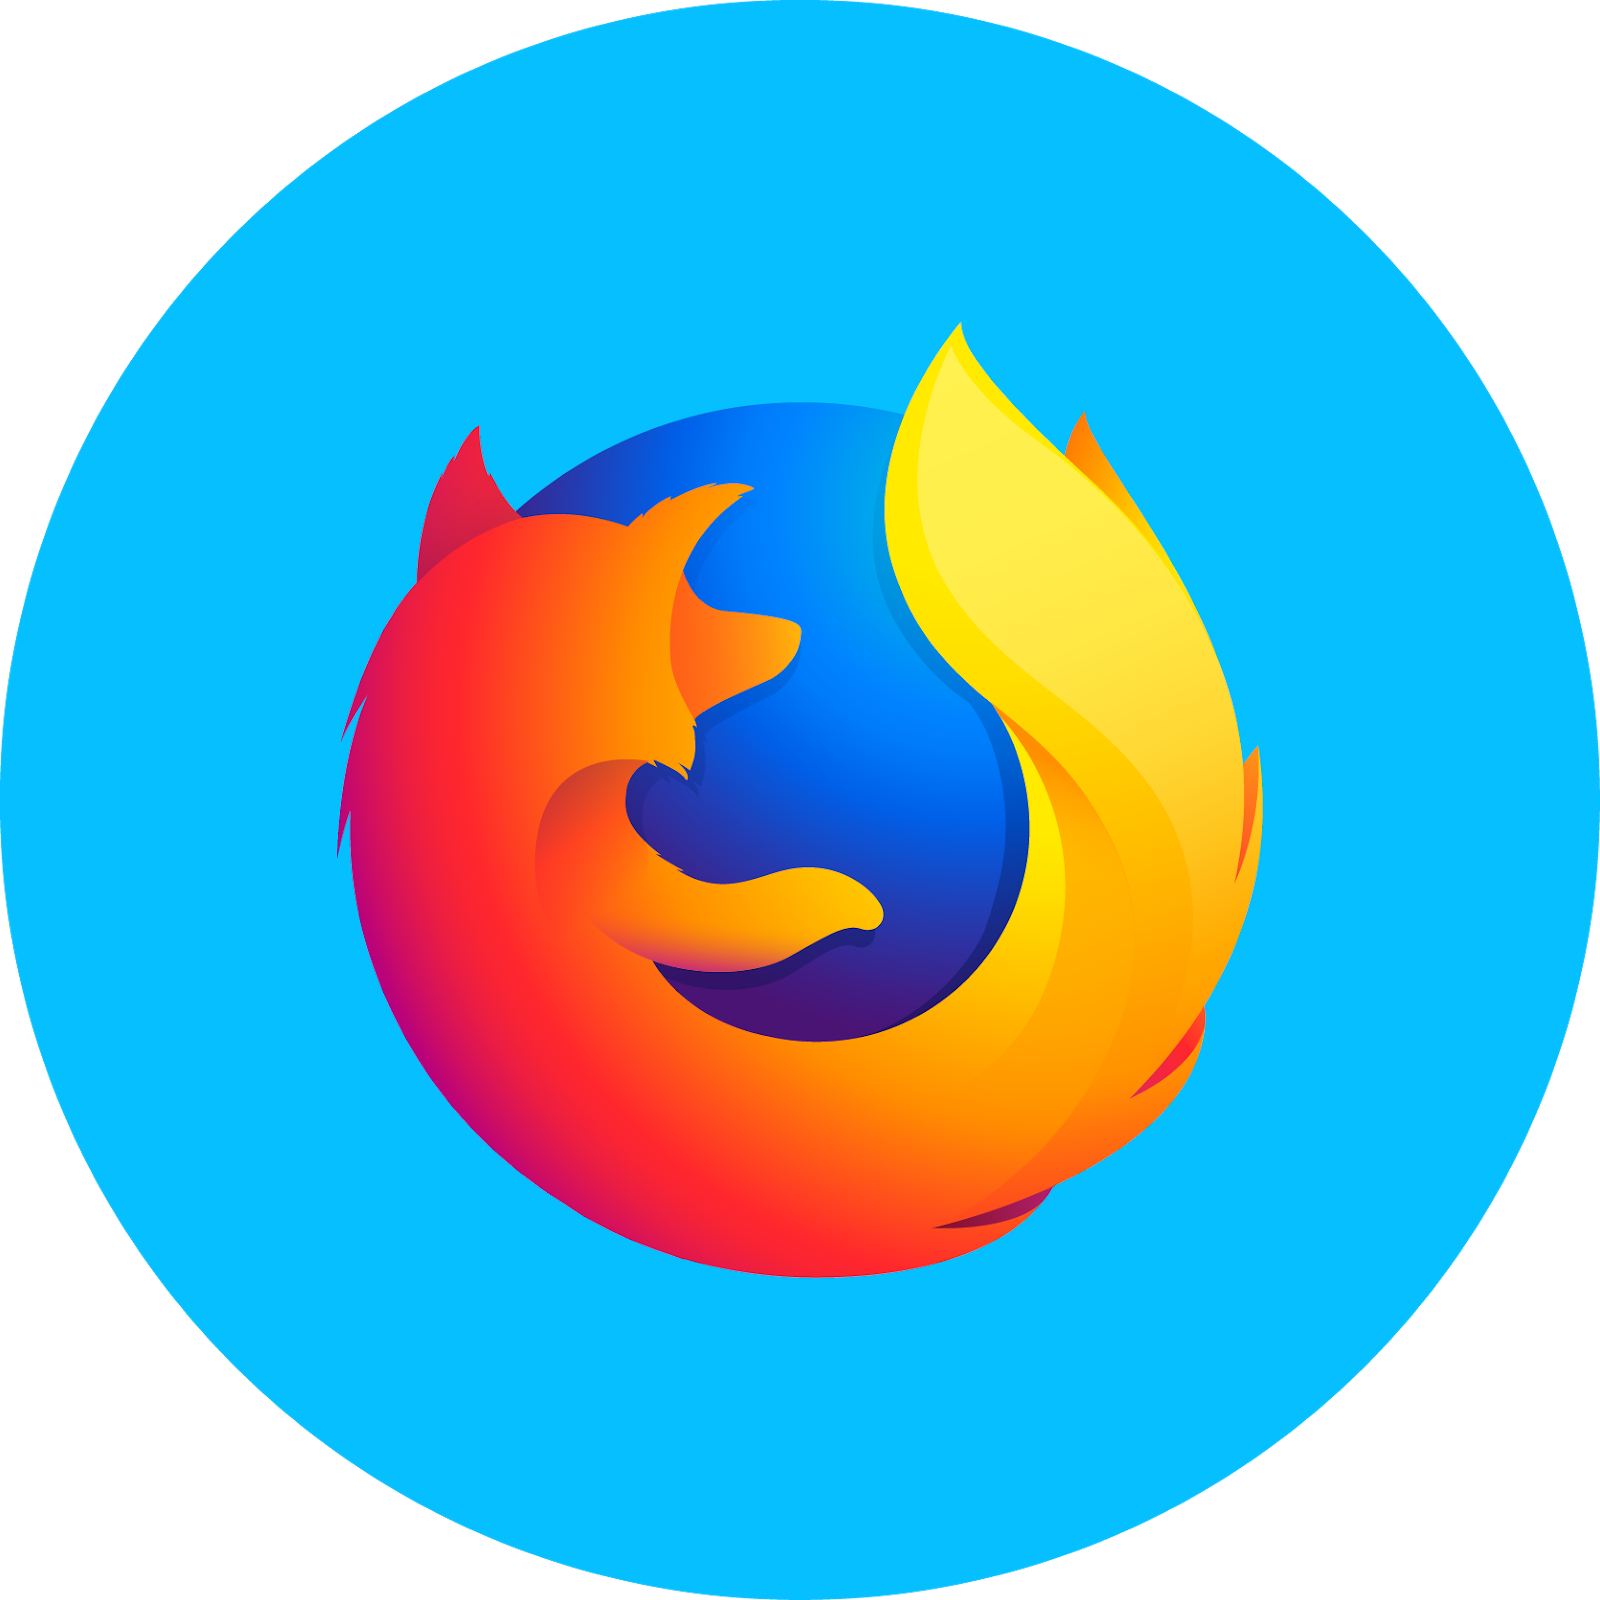 Значок фаерфокс. Иконка Firefox PNG. Иконка мазила фаерфокс. Mozilla Firefox старый логотип. Ярлык firefox